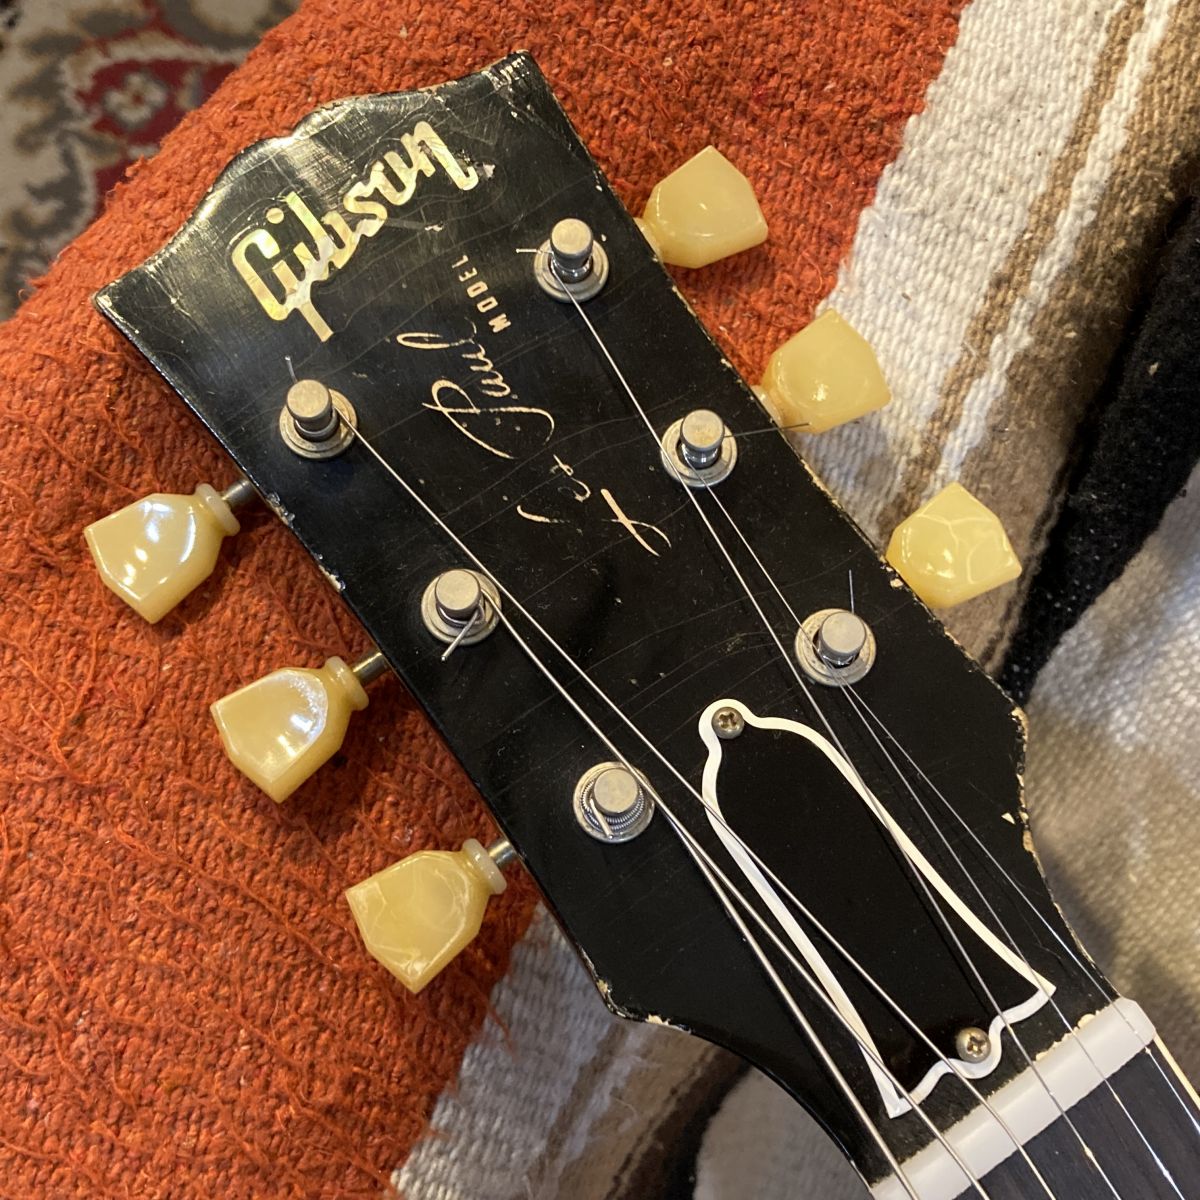 [SN 721370] USED Gibson Custom Shop / Murphy Lab 1957 Les Paul Standard Heavy Aged 60s Gold Dark Back [04]